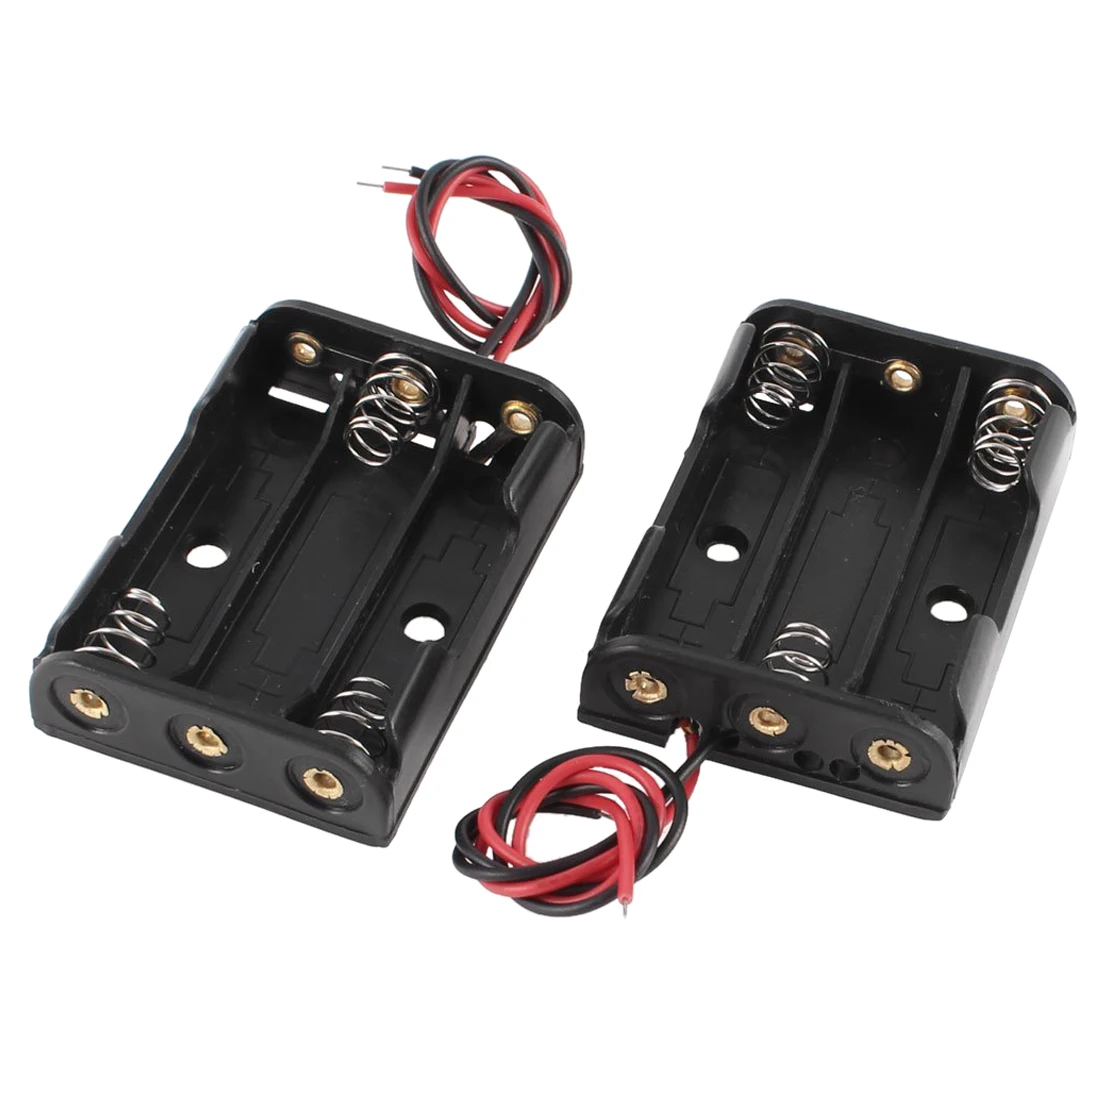 

2 Pcs Black Plastic Battery Holder Case Wired for 3 x AAA 1.5V